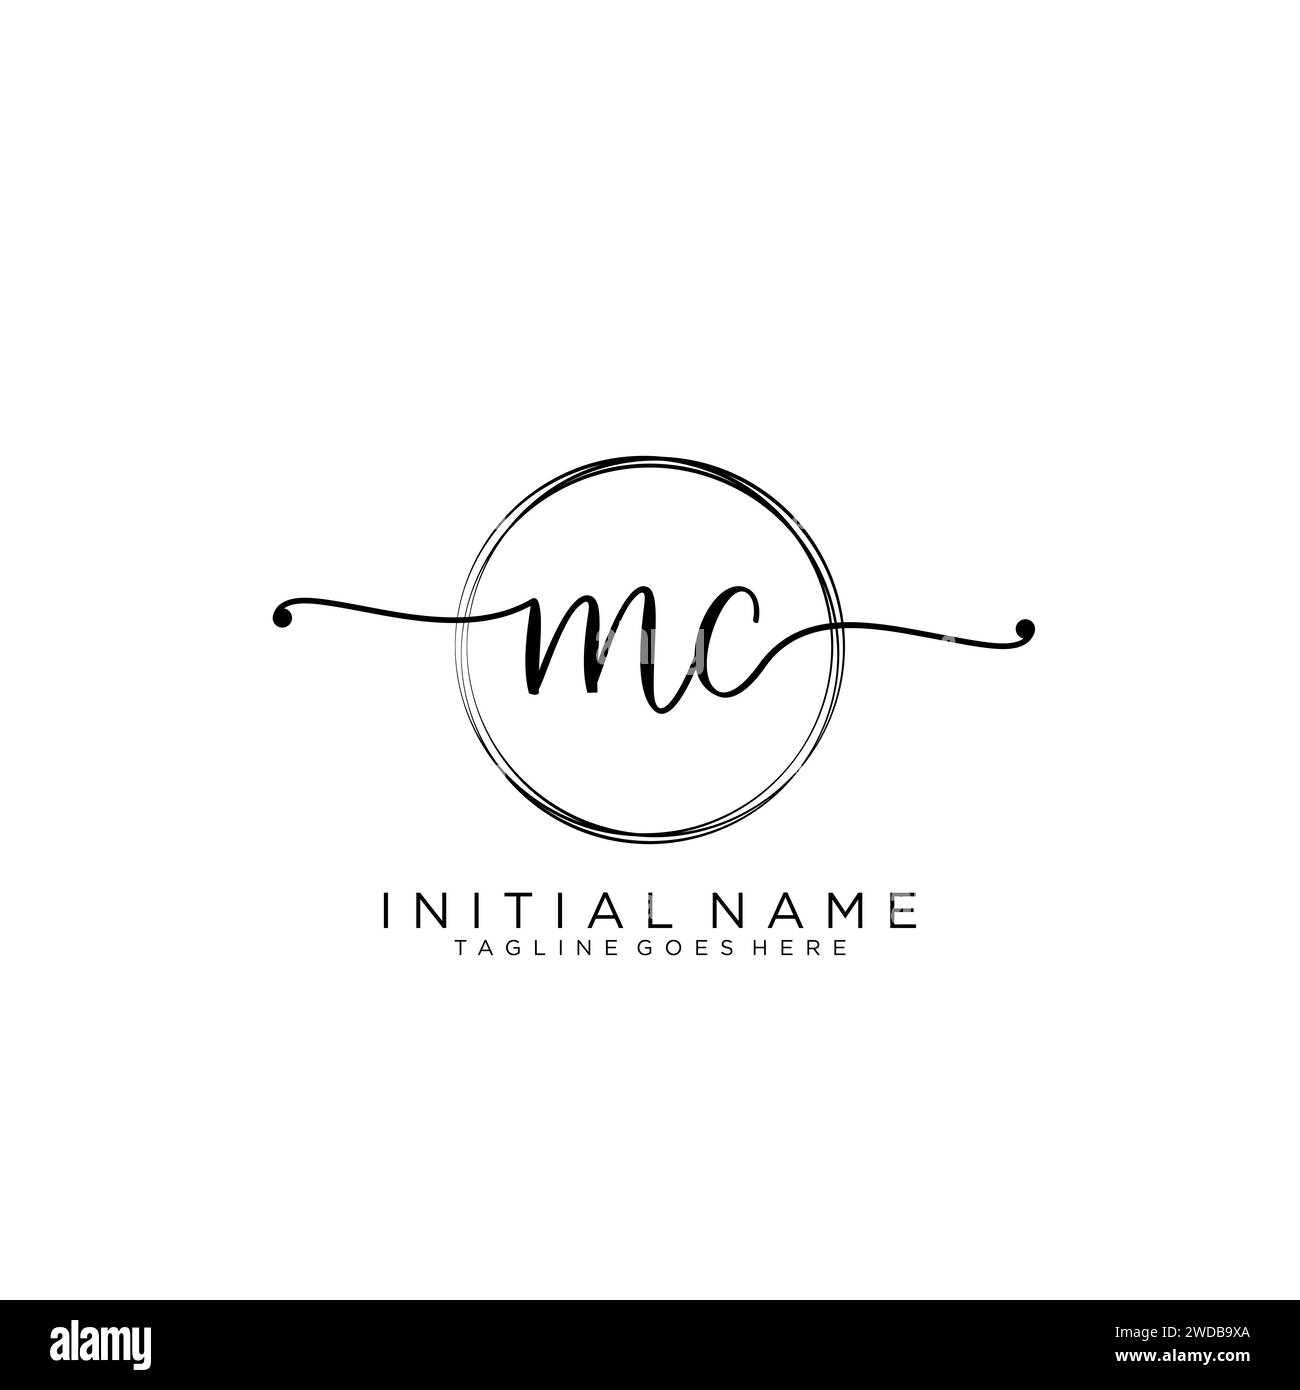 MC Initial handwriting logo with circle Stock Vector